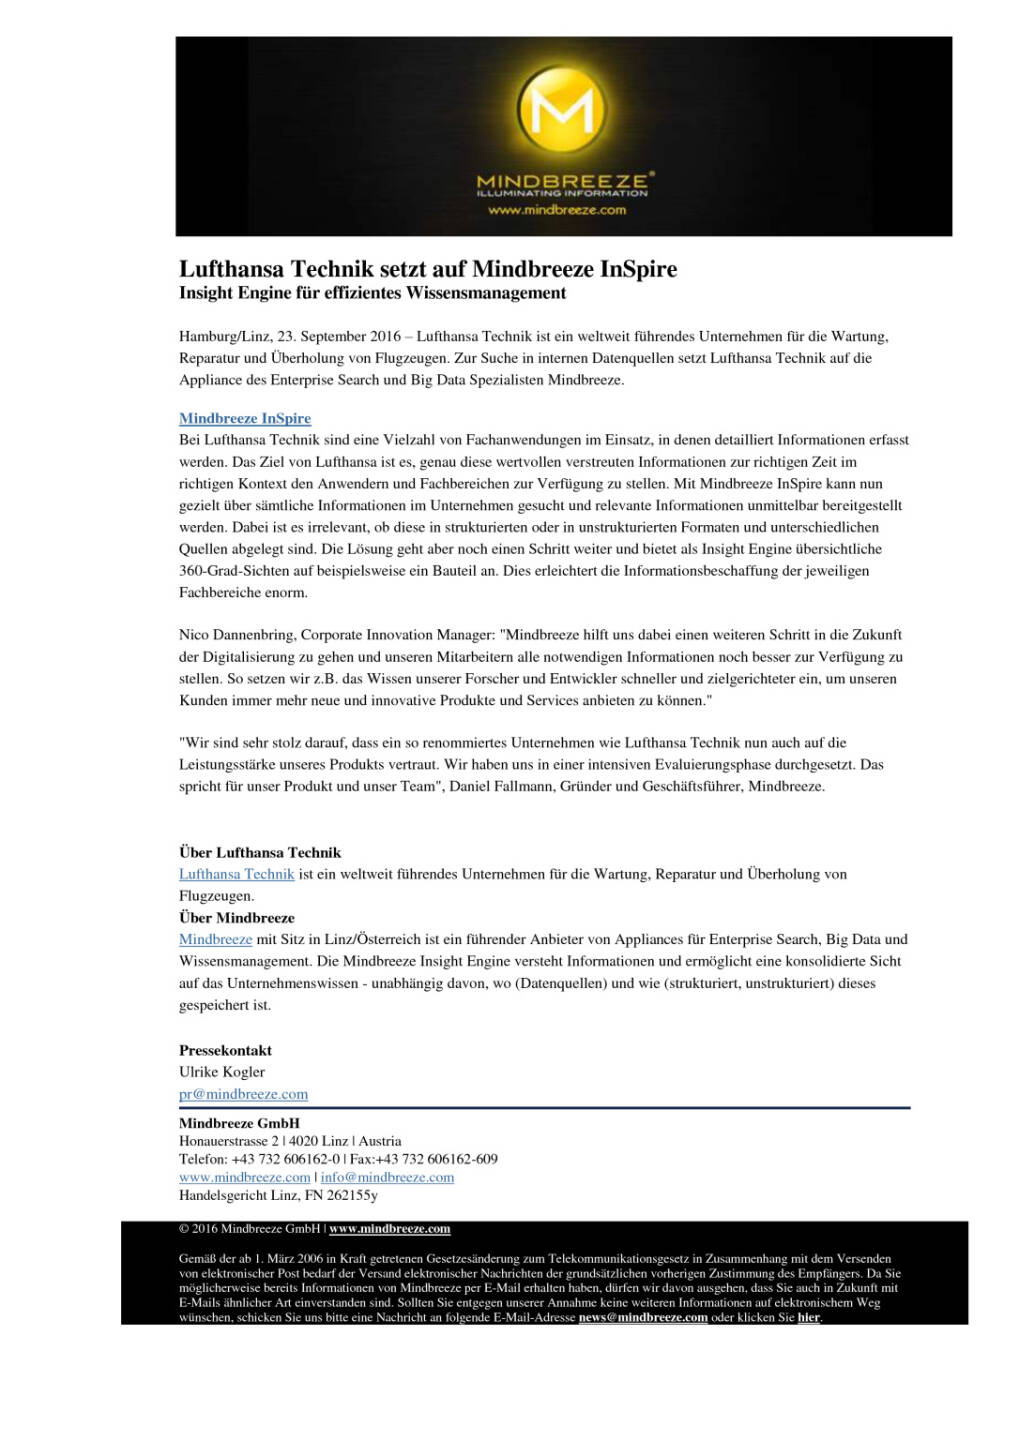 Lufthansa Technik setzt auf Mindbreeze InSpire, Seite 1/1, komplettes Dokument unter http://boerse-social.com/static/uploads/file_1824_lufthansa_technik_setzt_auf_mindbreeze_inspire.pdf